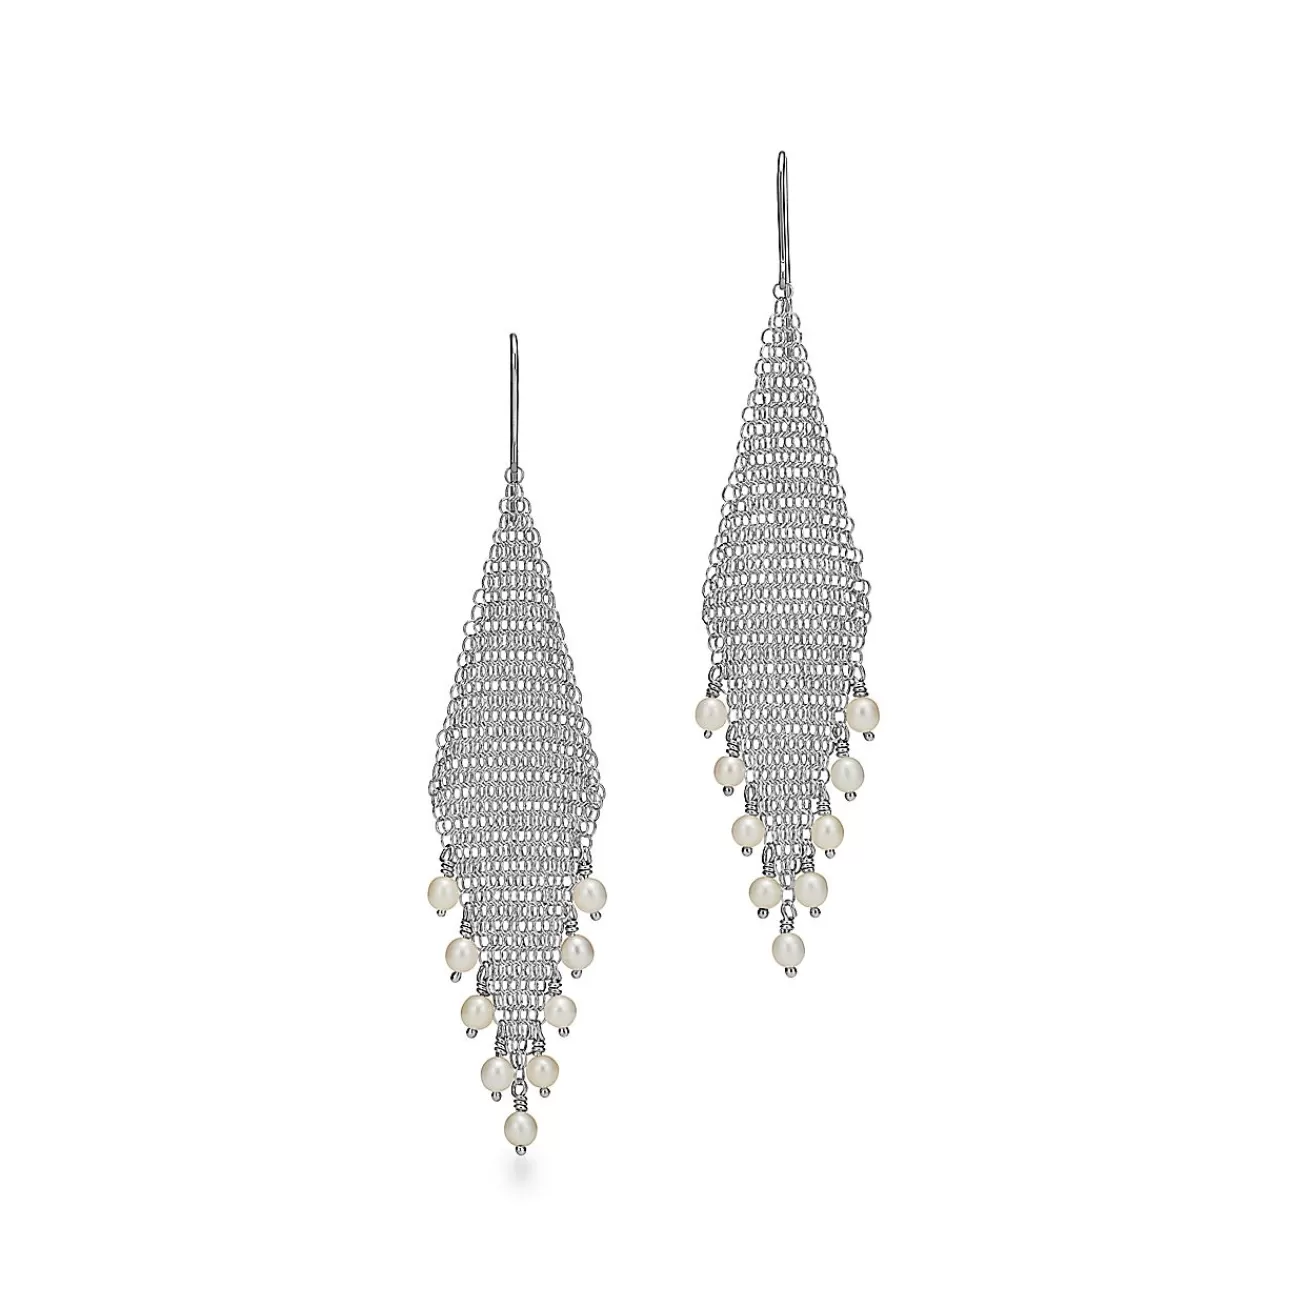 Tiffany & Co. Elsa Peretti® Mesh fringe earrings in sterling silver with freshwater pearls. | ^ Earrings | Sterling Silver Jewelry